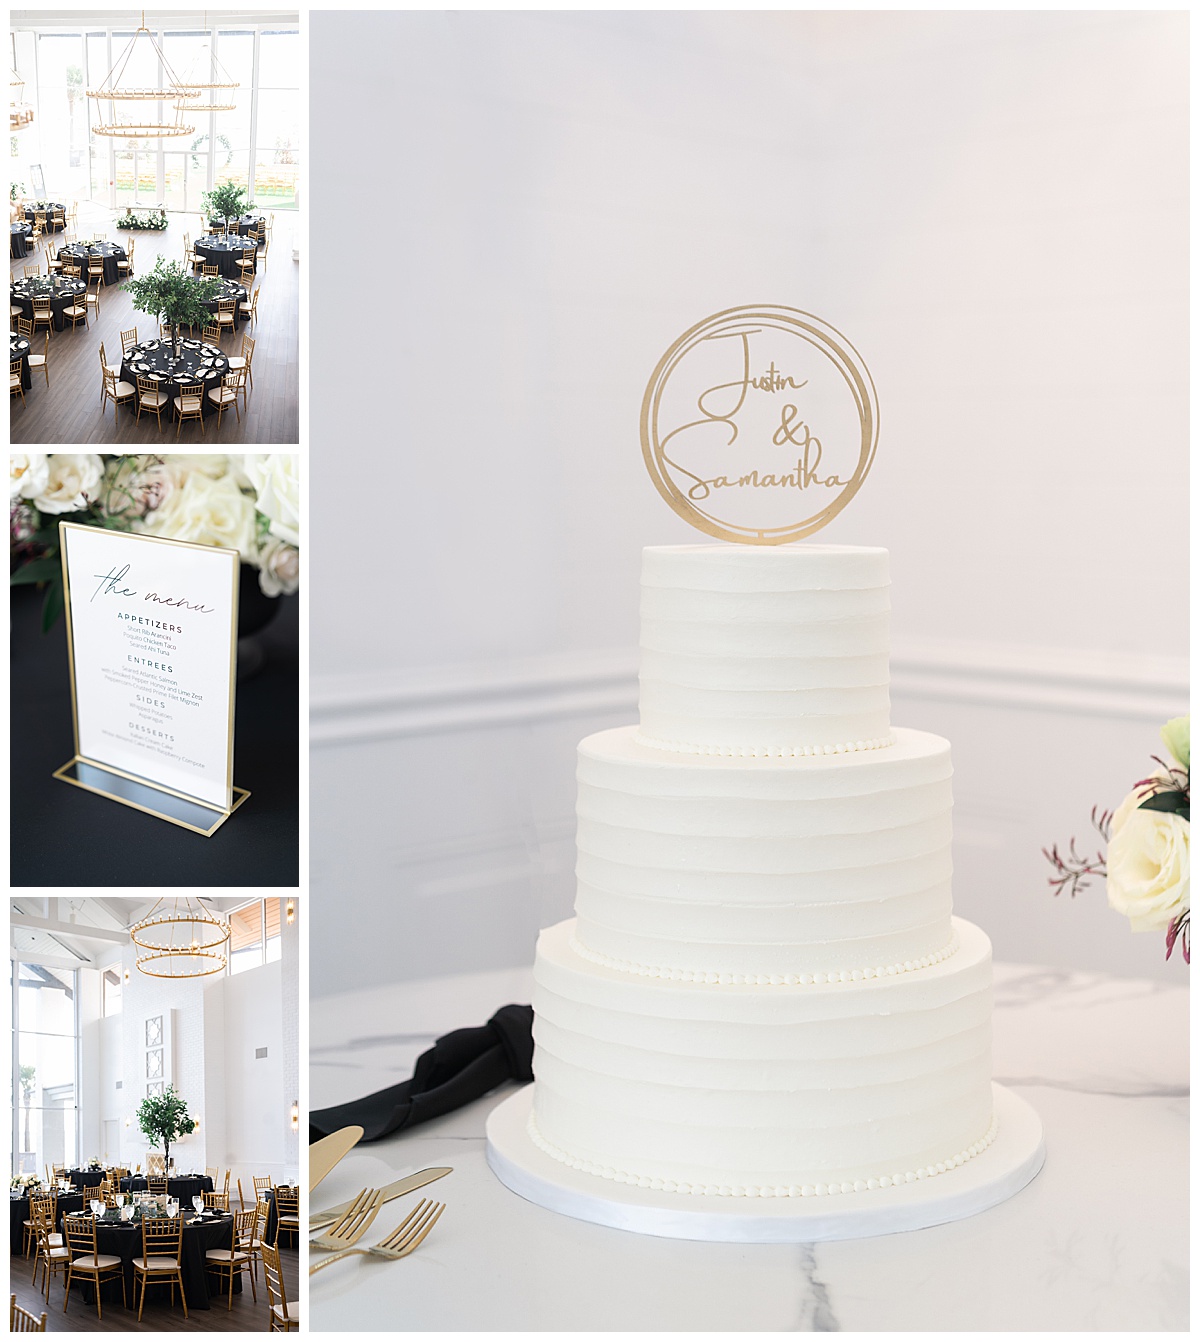 Stunning wedding cake reception decor at Charleston Lane 